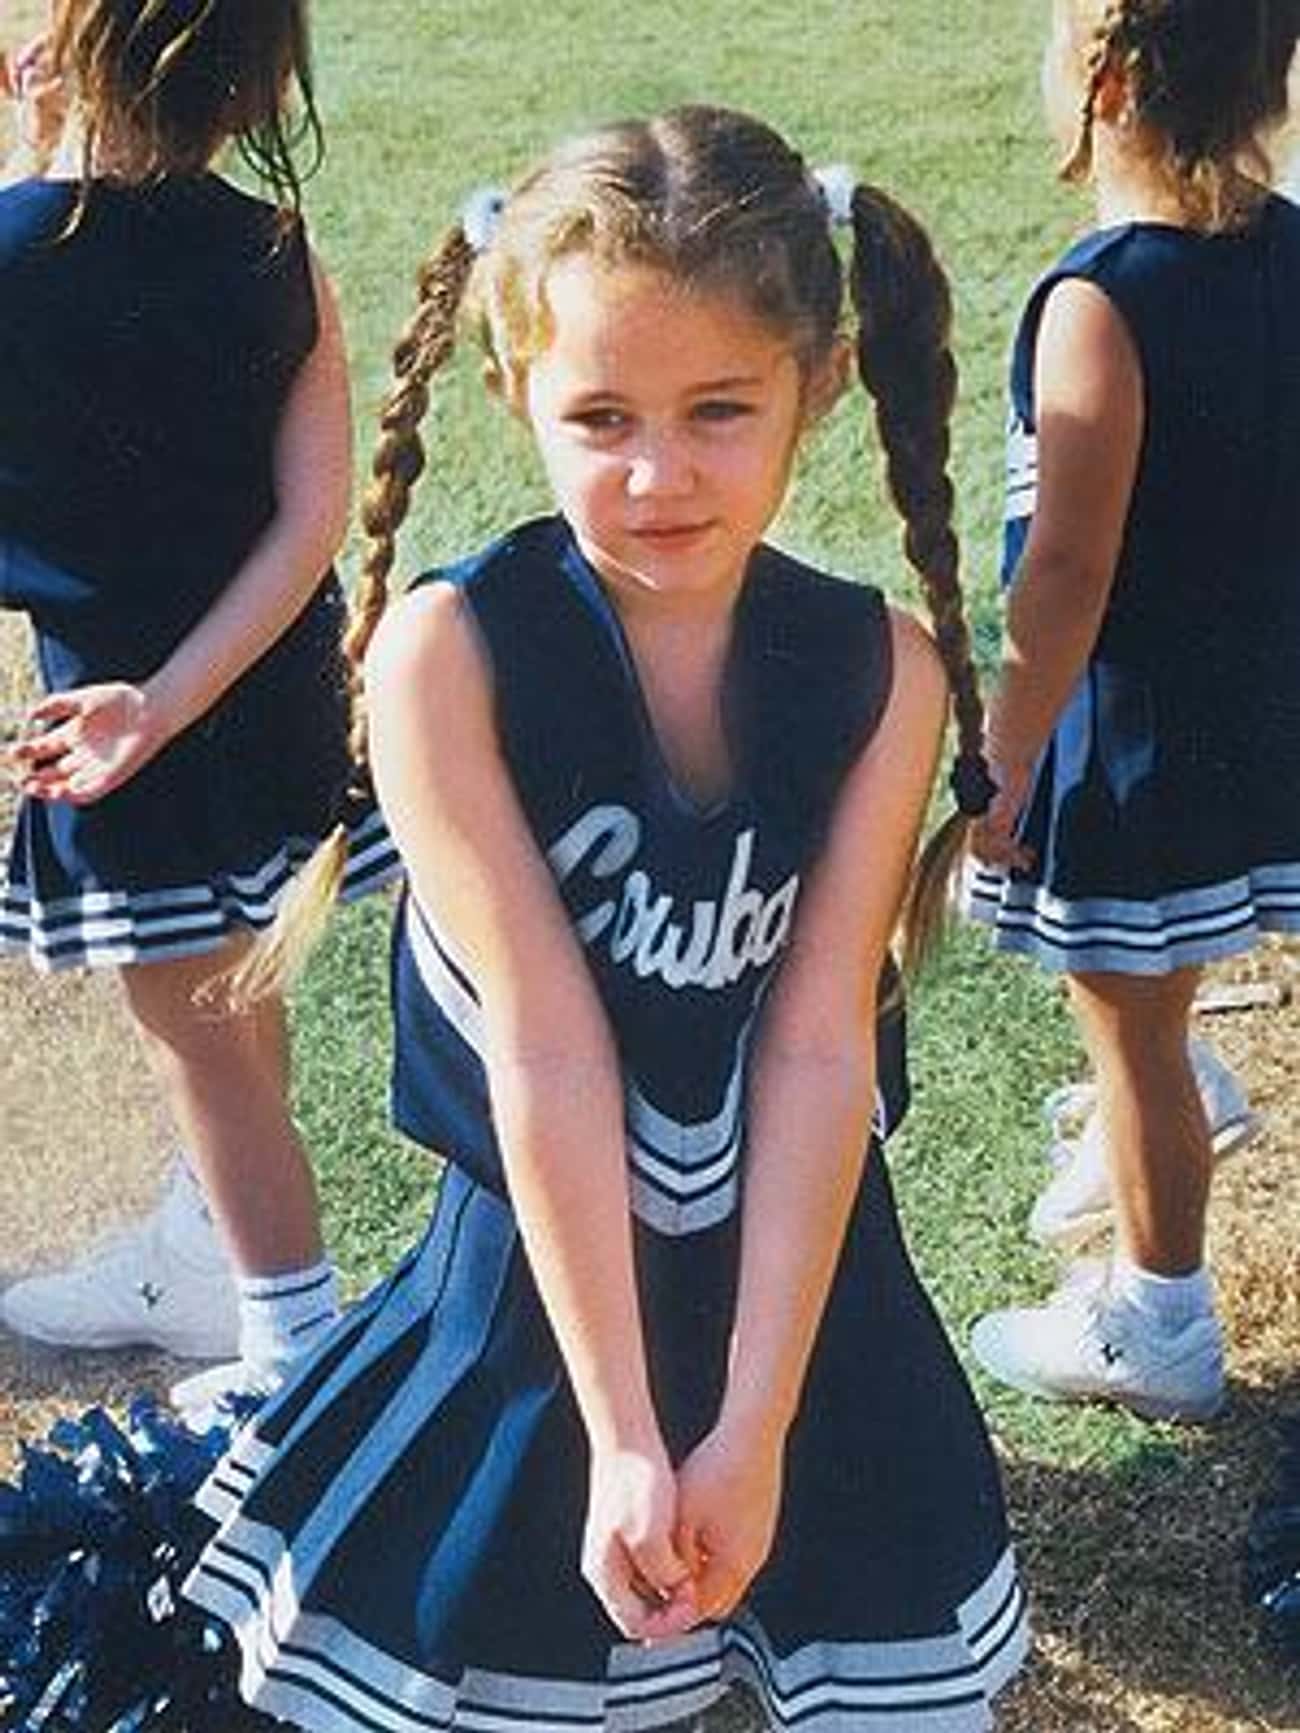 Young Miley Cyrus as a Cheerleader